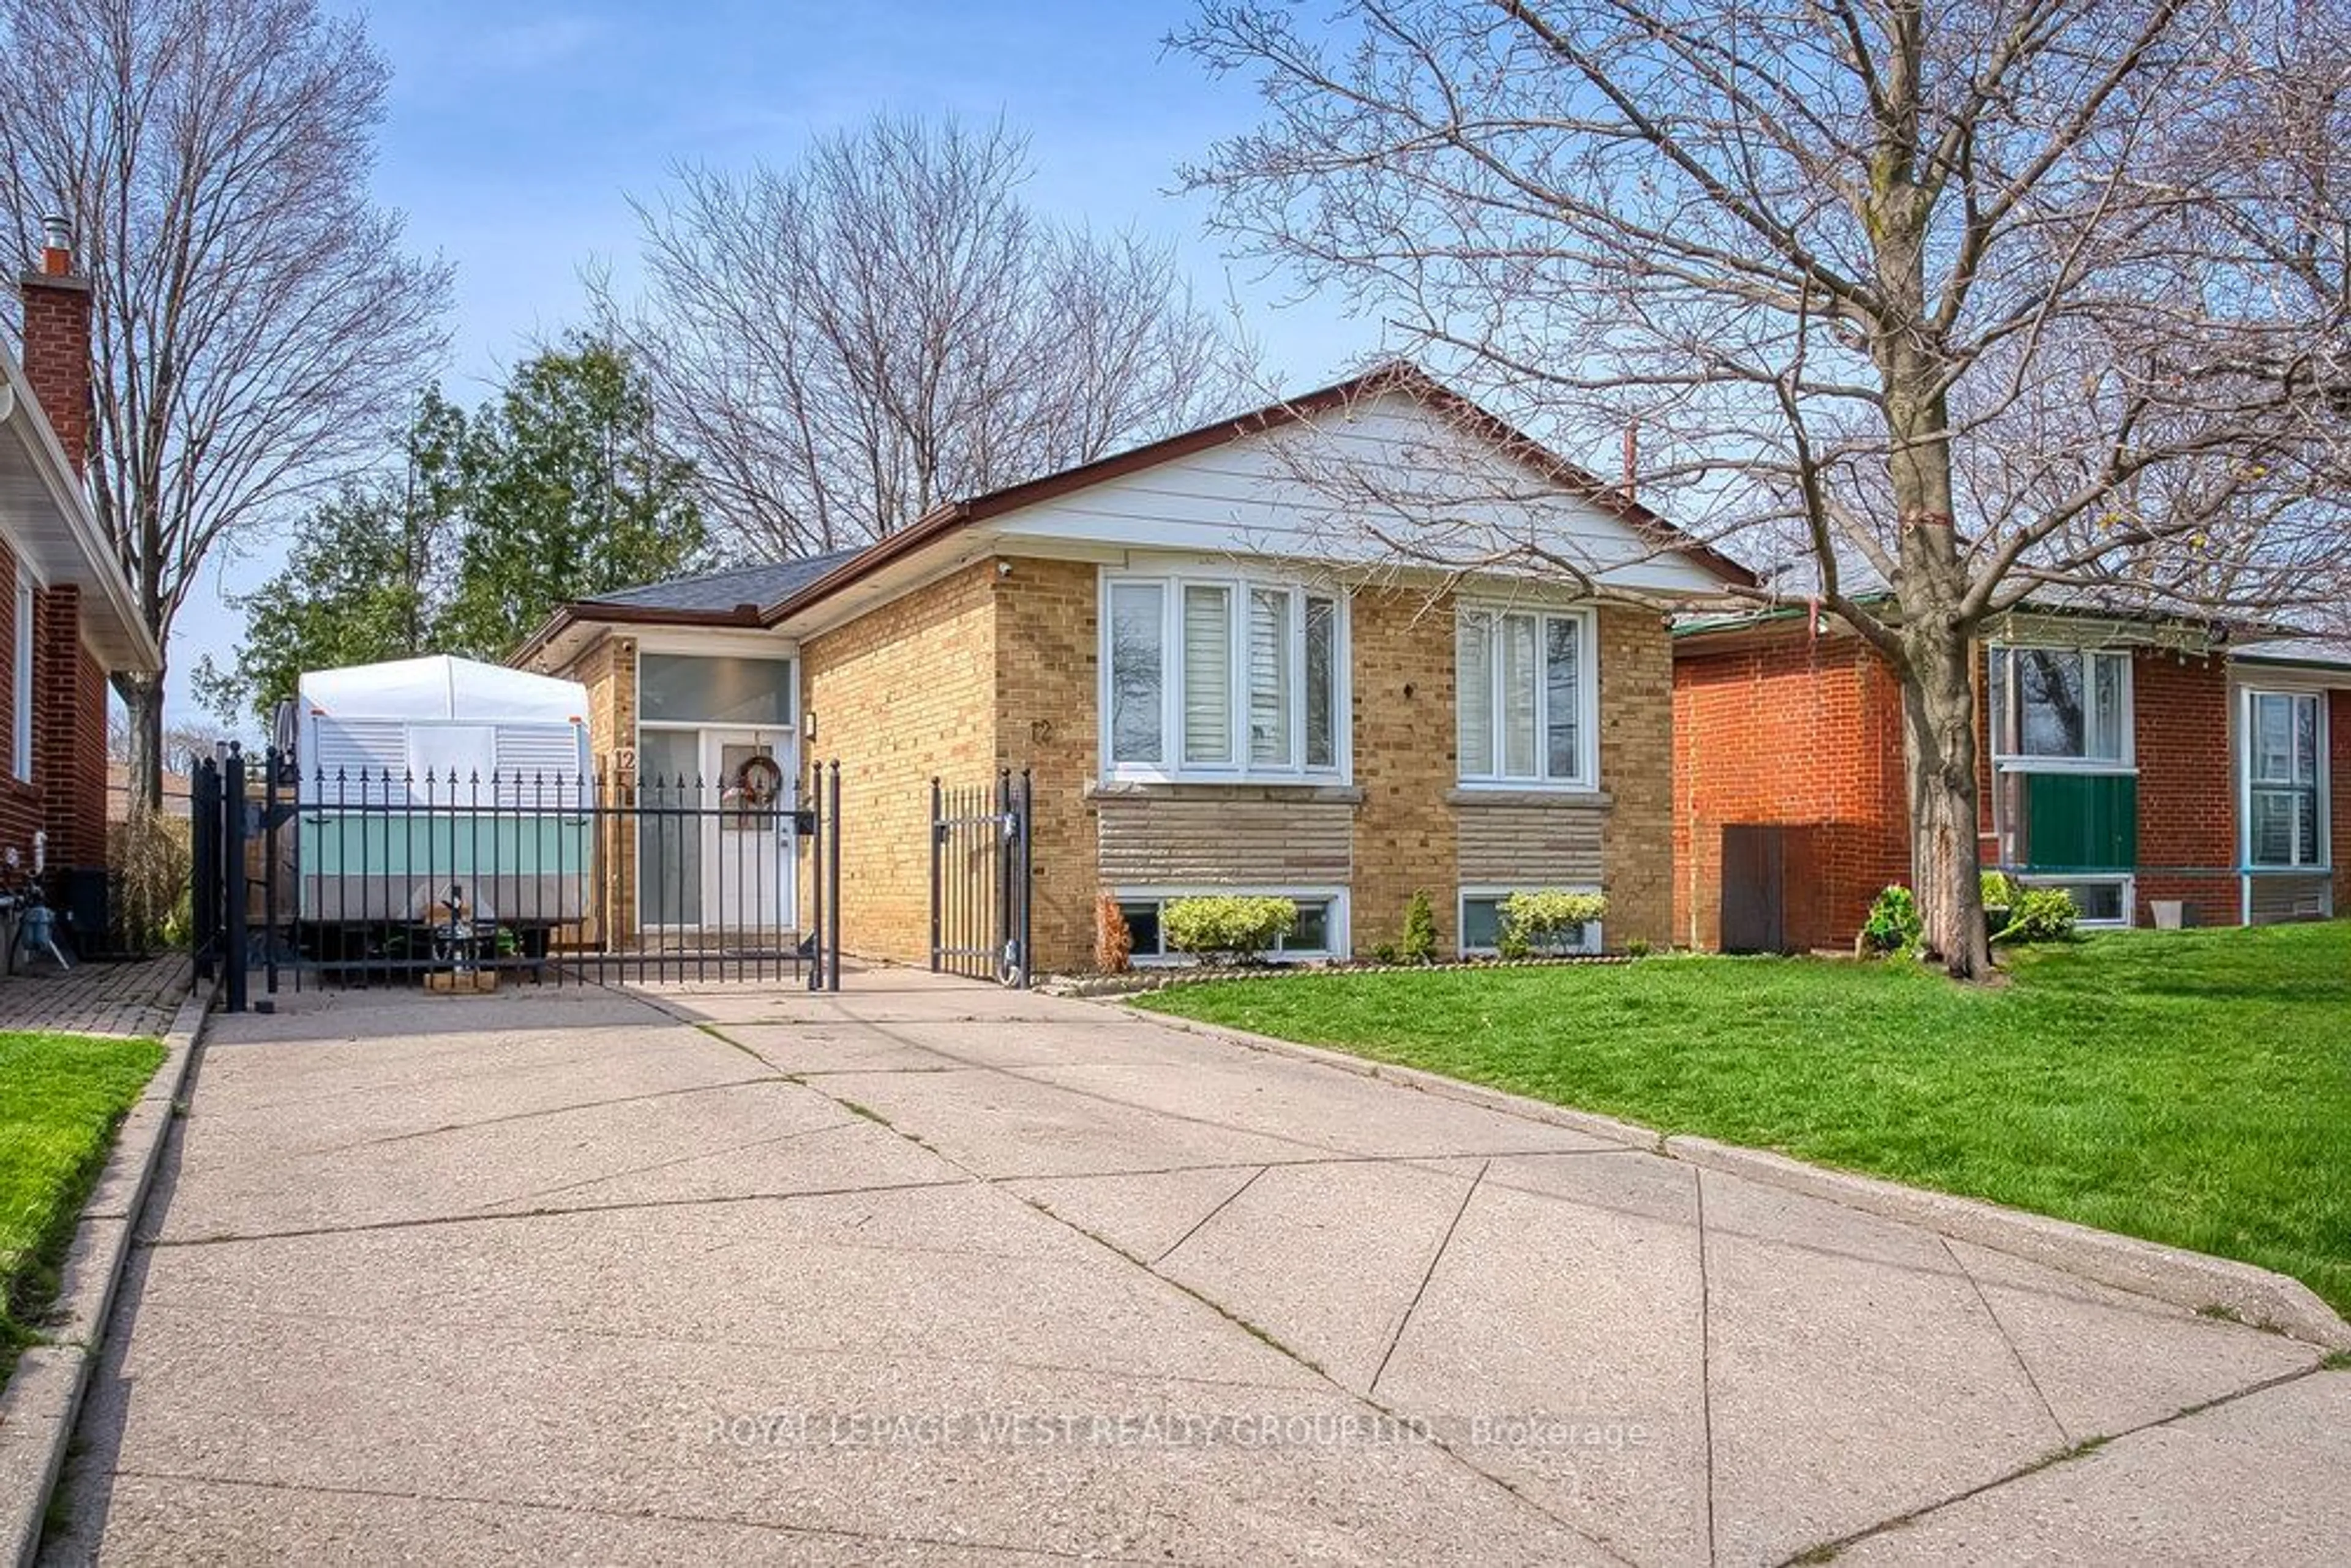 Home with brick exterior material for 12 Leavenworth Cres, Toronto Ontario M9C 1T4